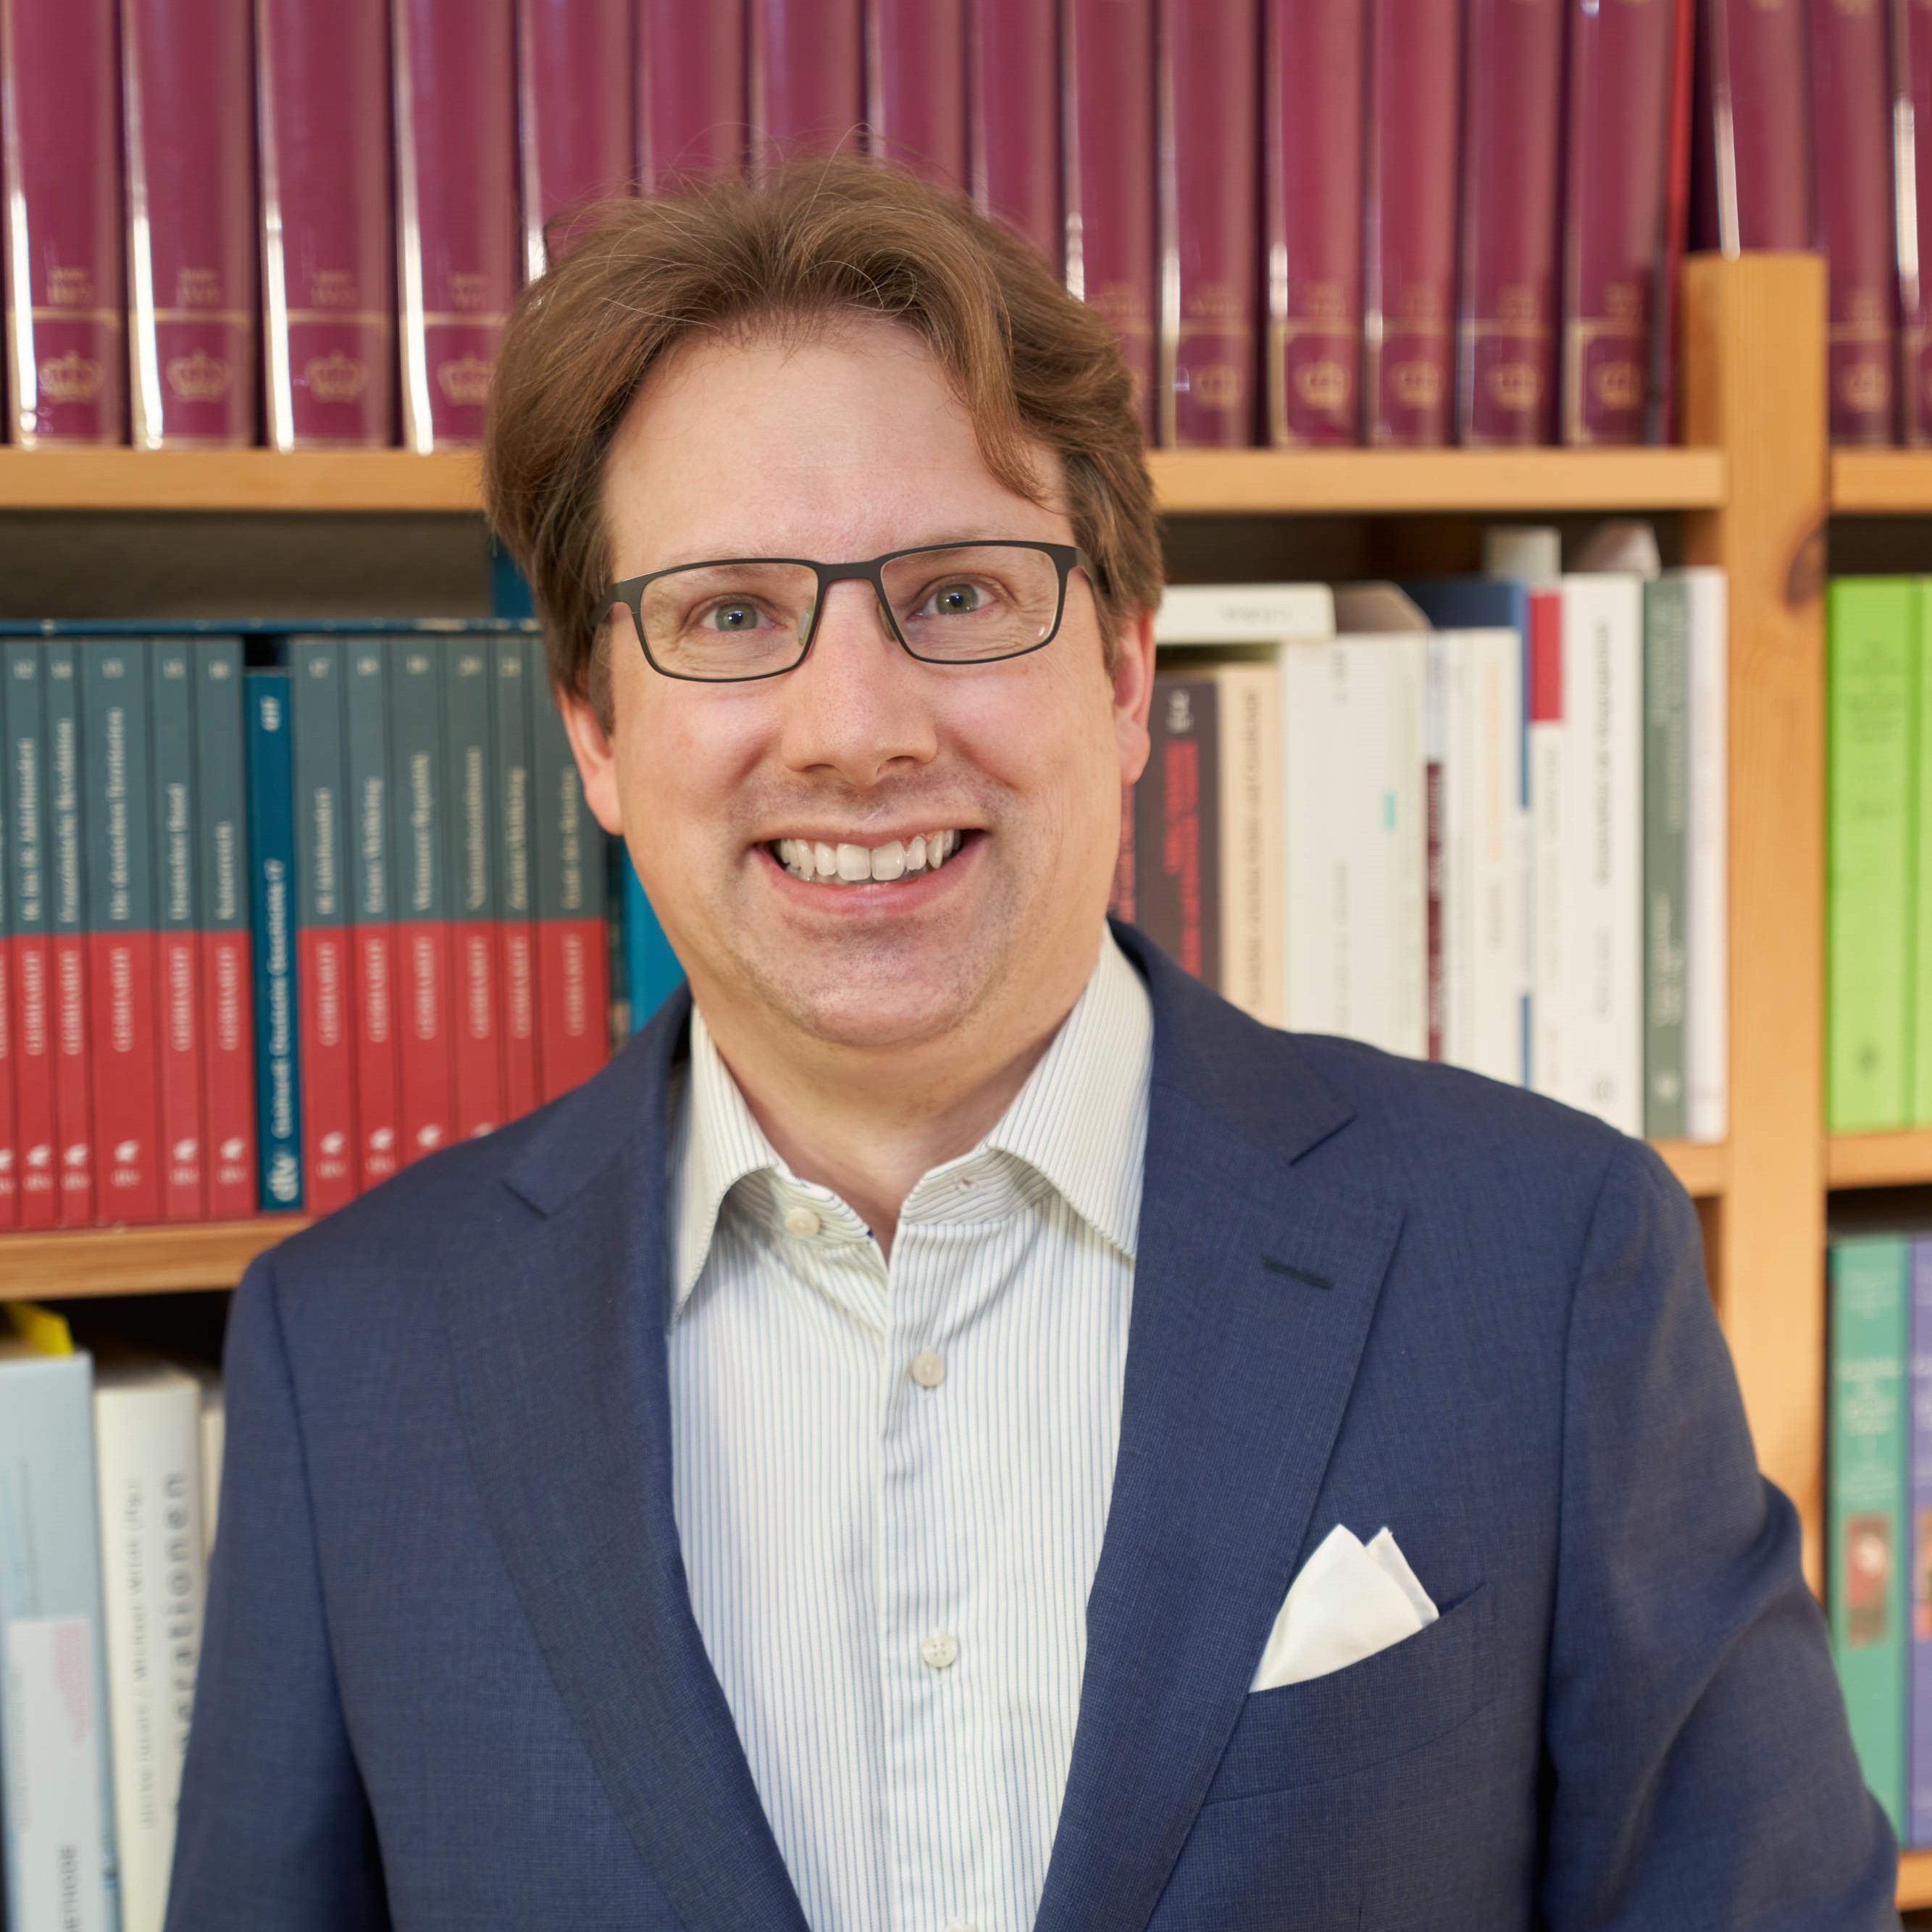 Profile image of Dr Simon Donig